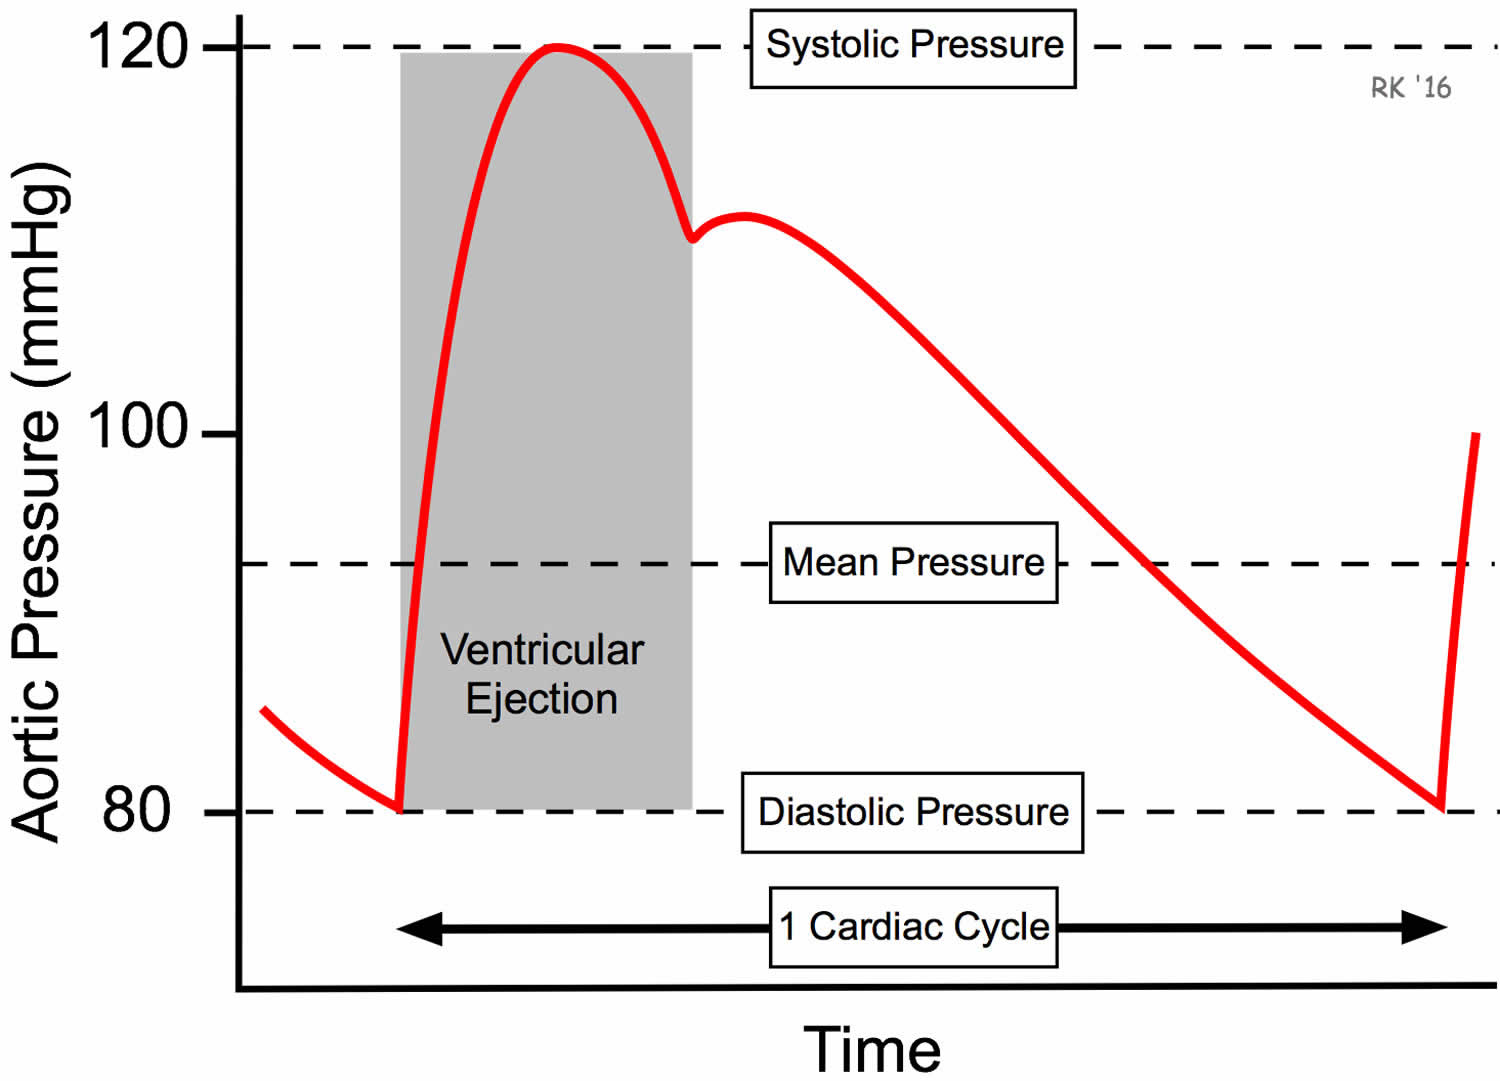 Mean arterial pressure definition, calculator and formula